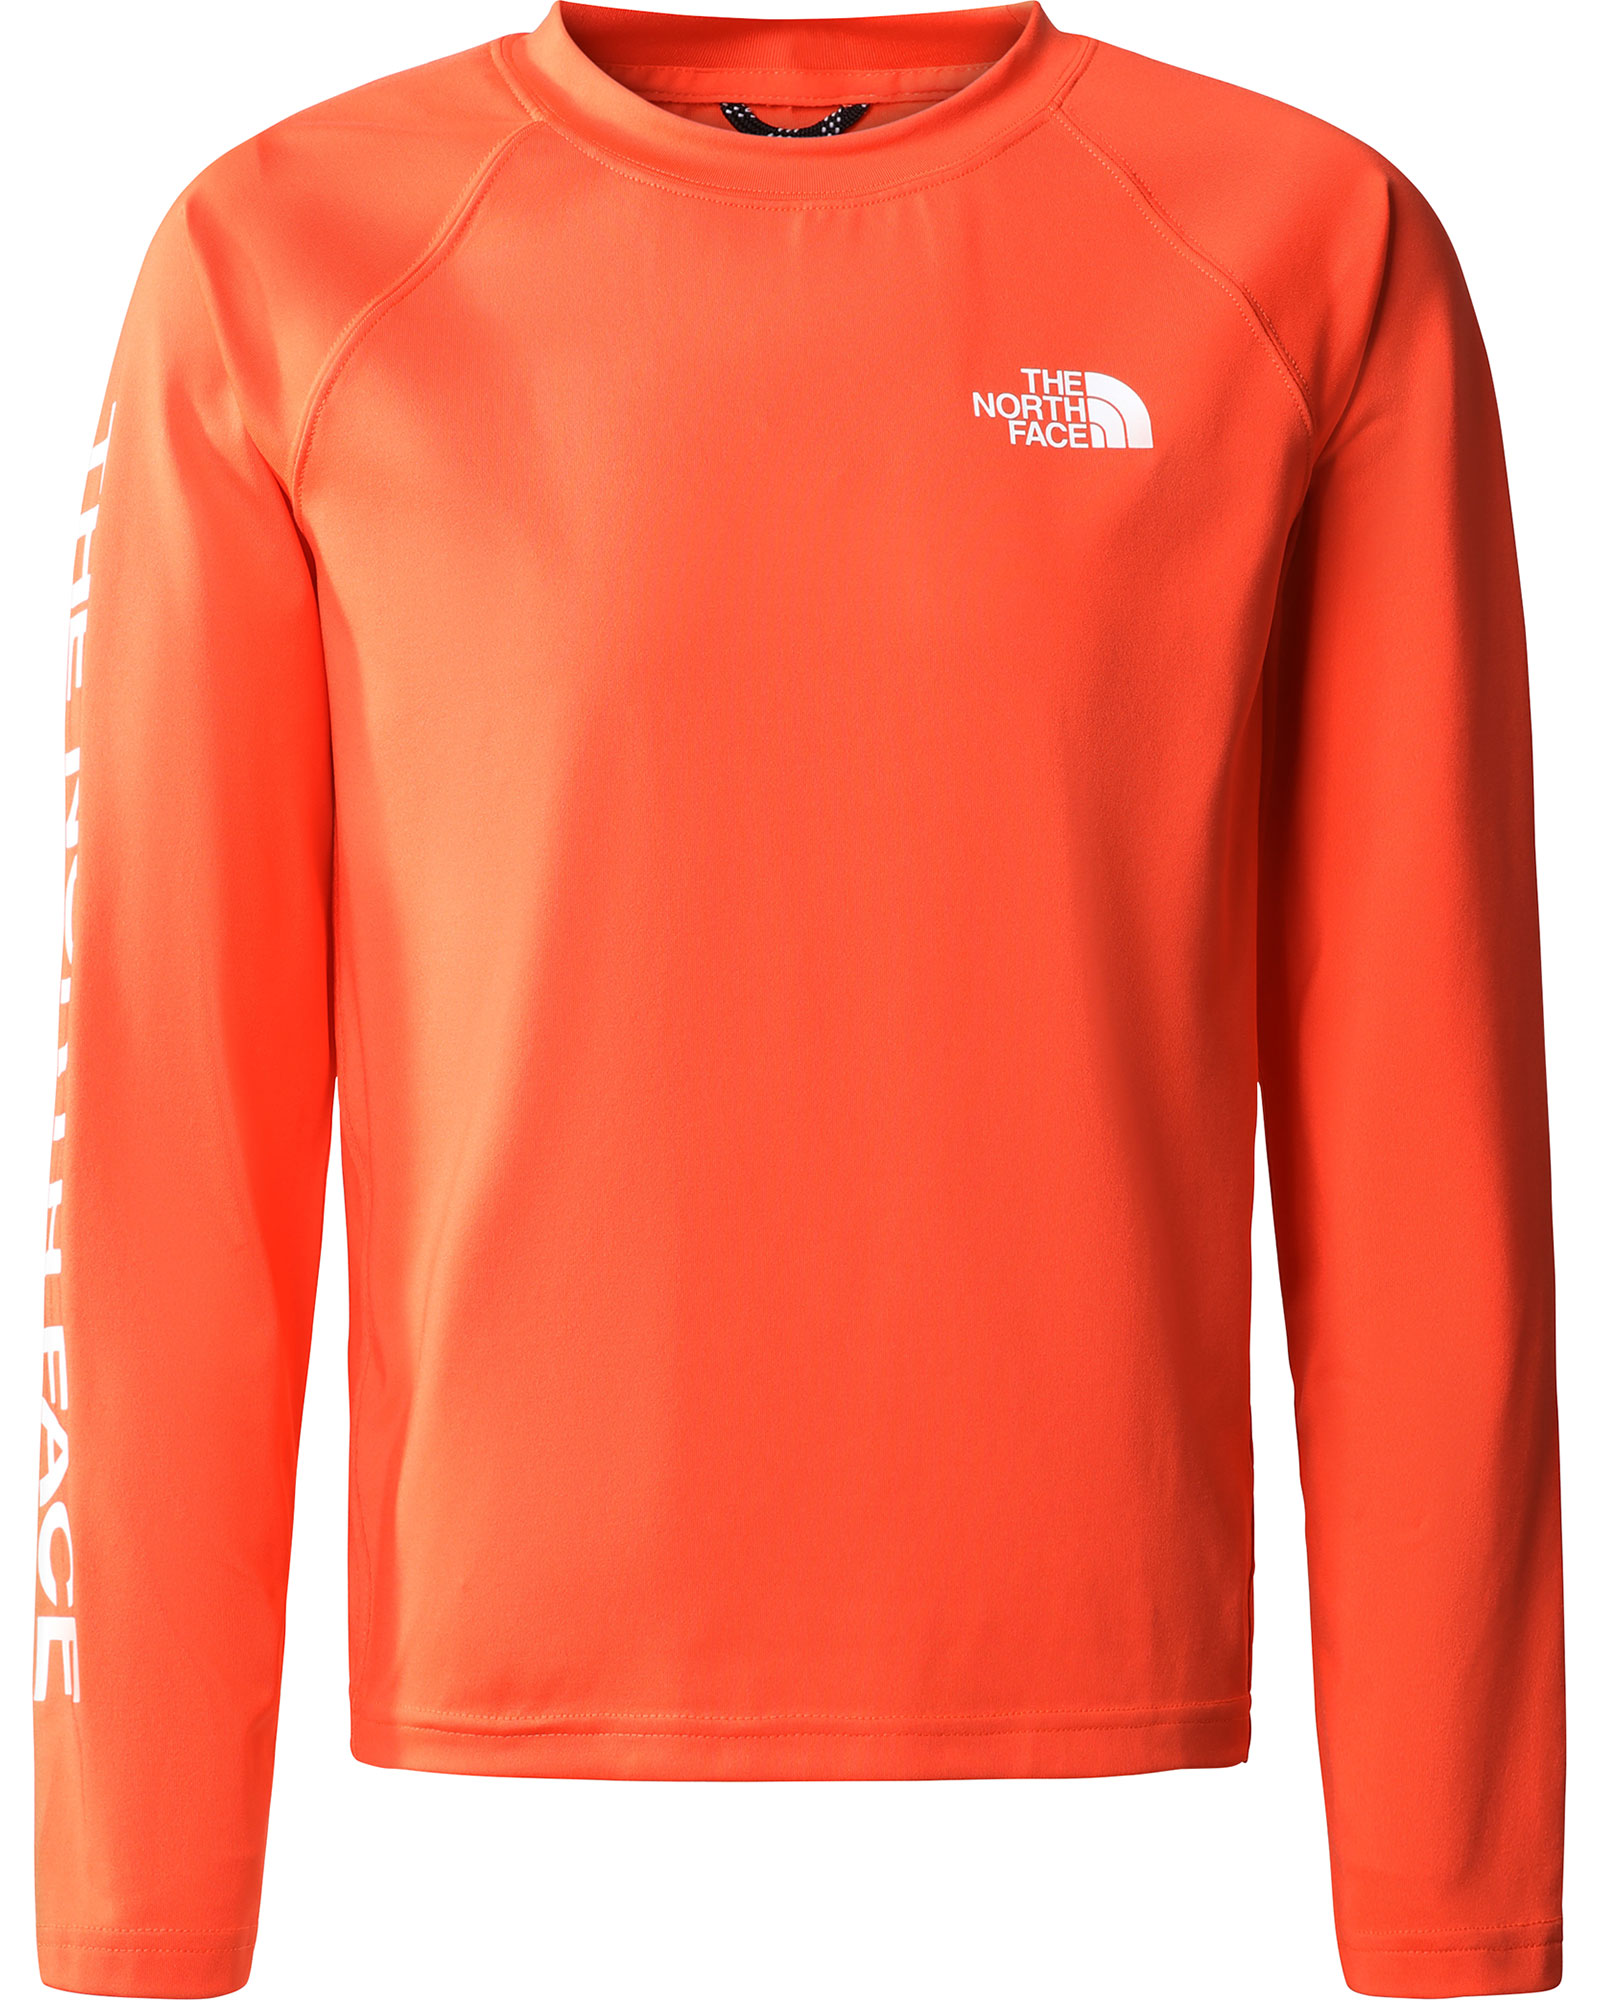 The North Face Boy’s Amphibious Long Sleeved Sun T Shirt - Retro Orange S